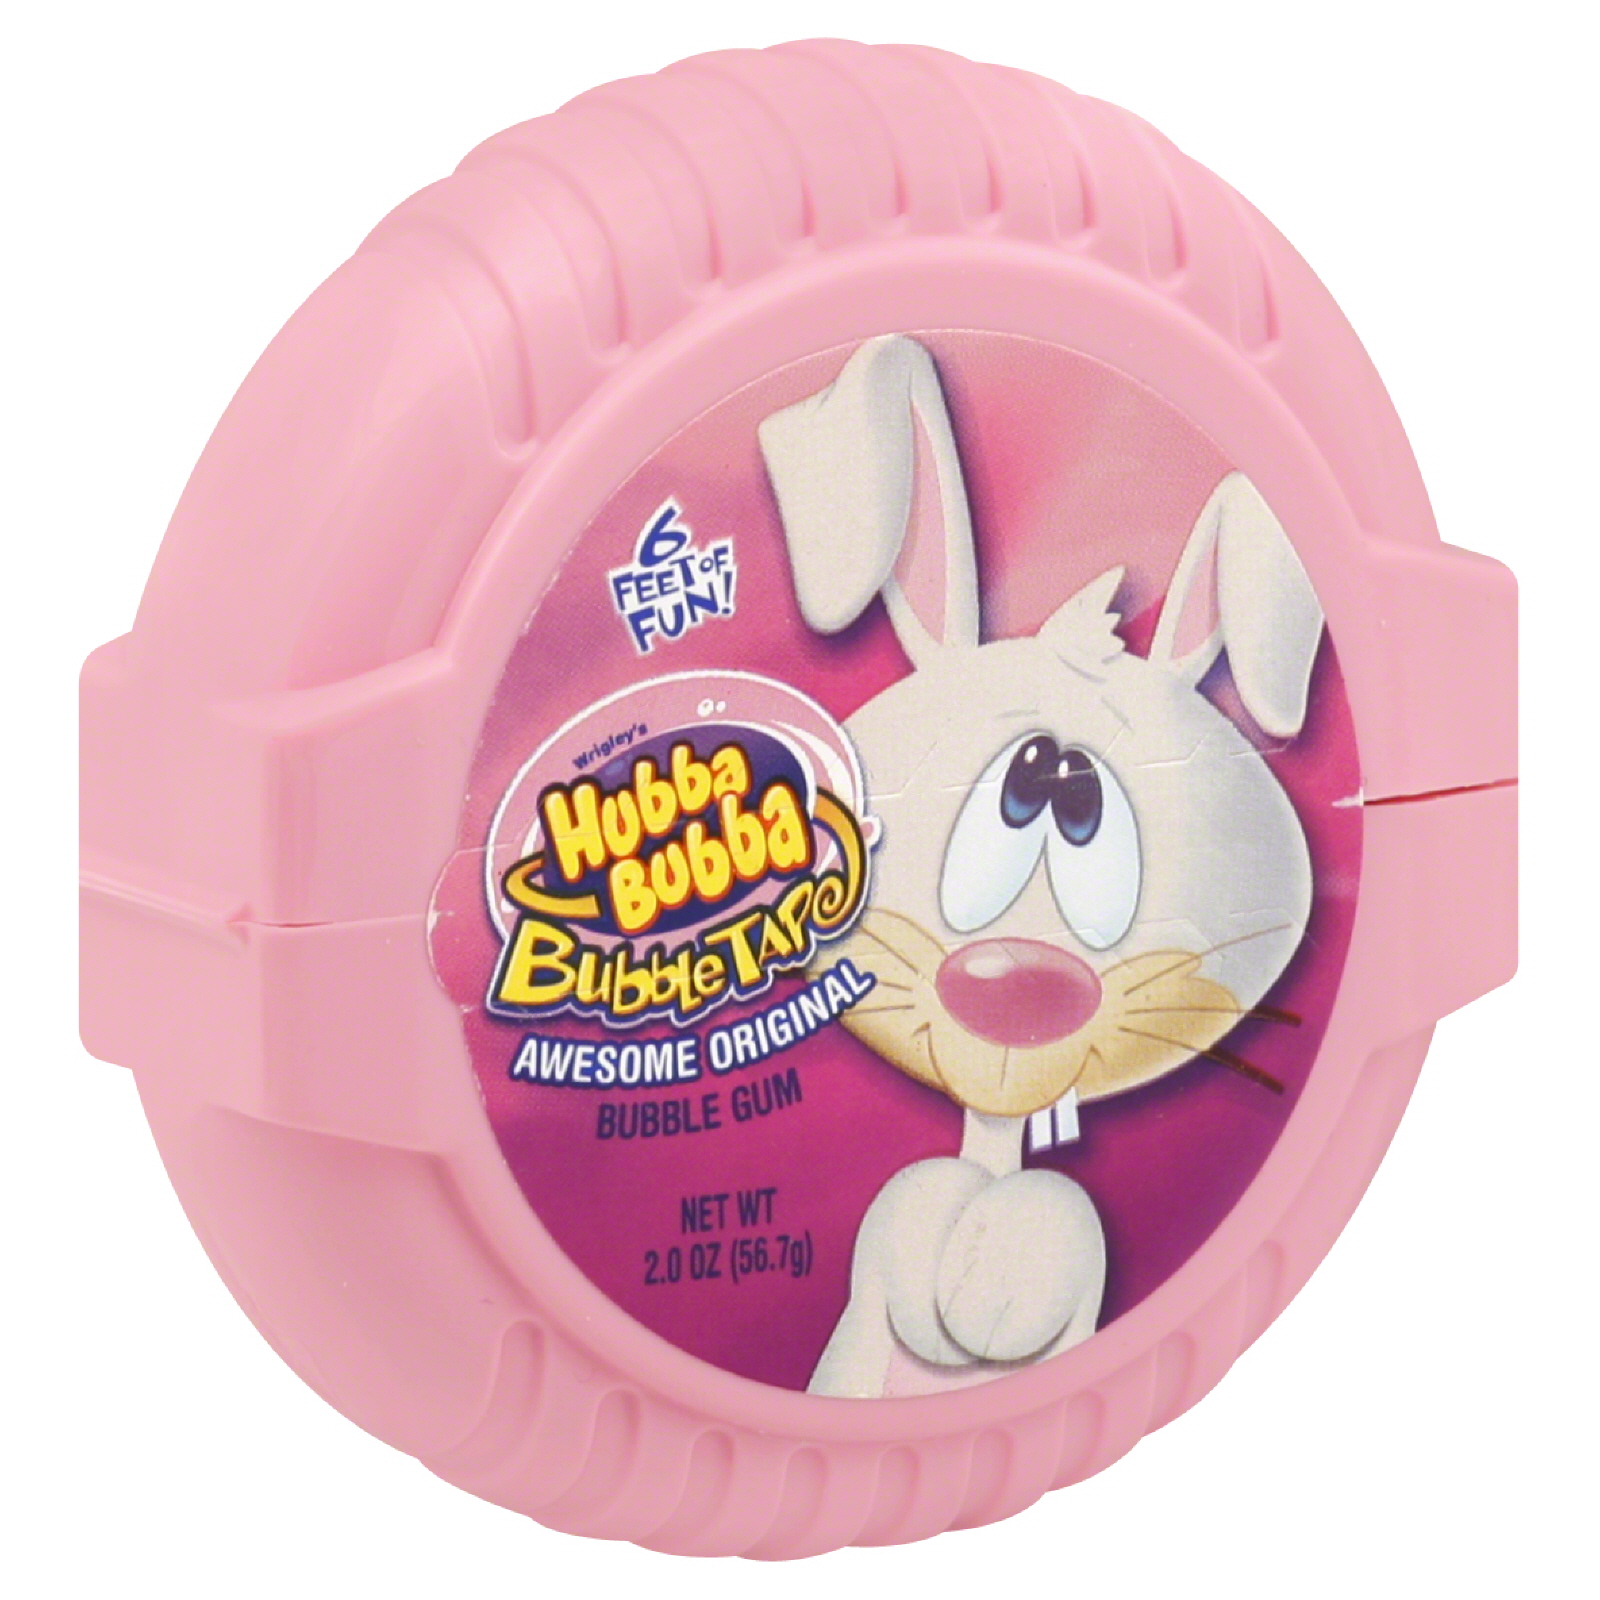 Wrigley's Hubba Bubba Bubble Tape Bubble Gum - Net Wt. 2 oz.